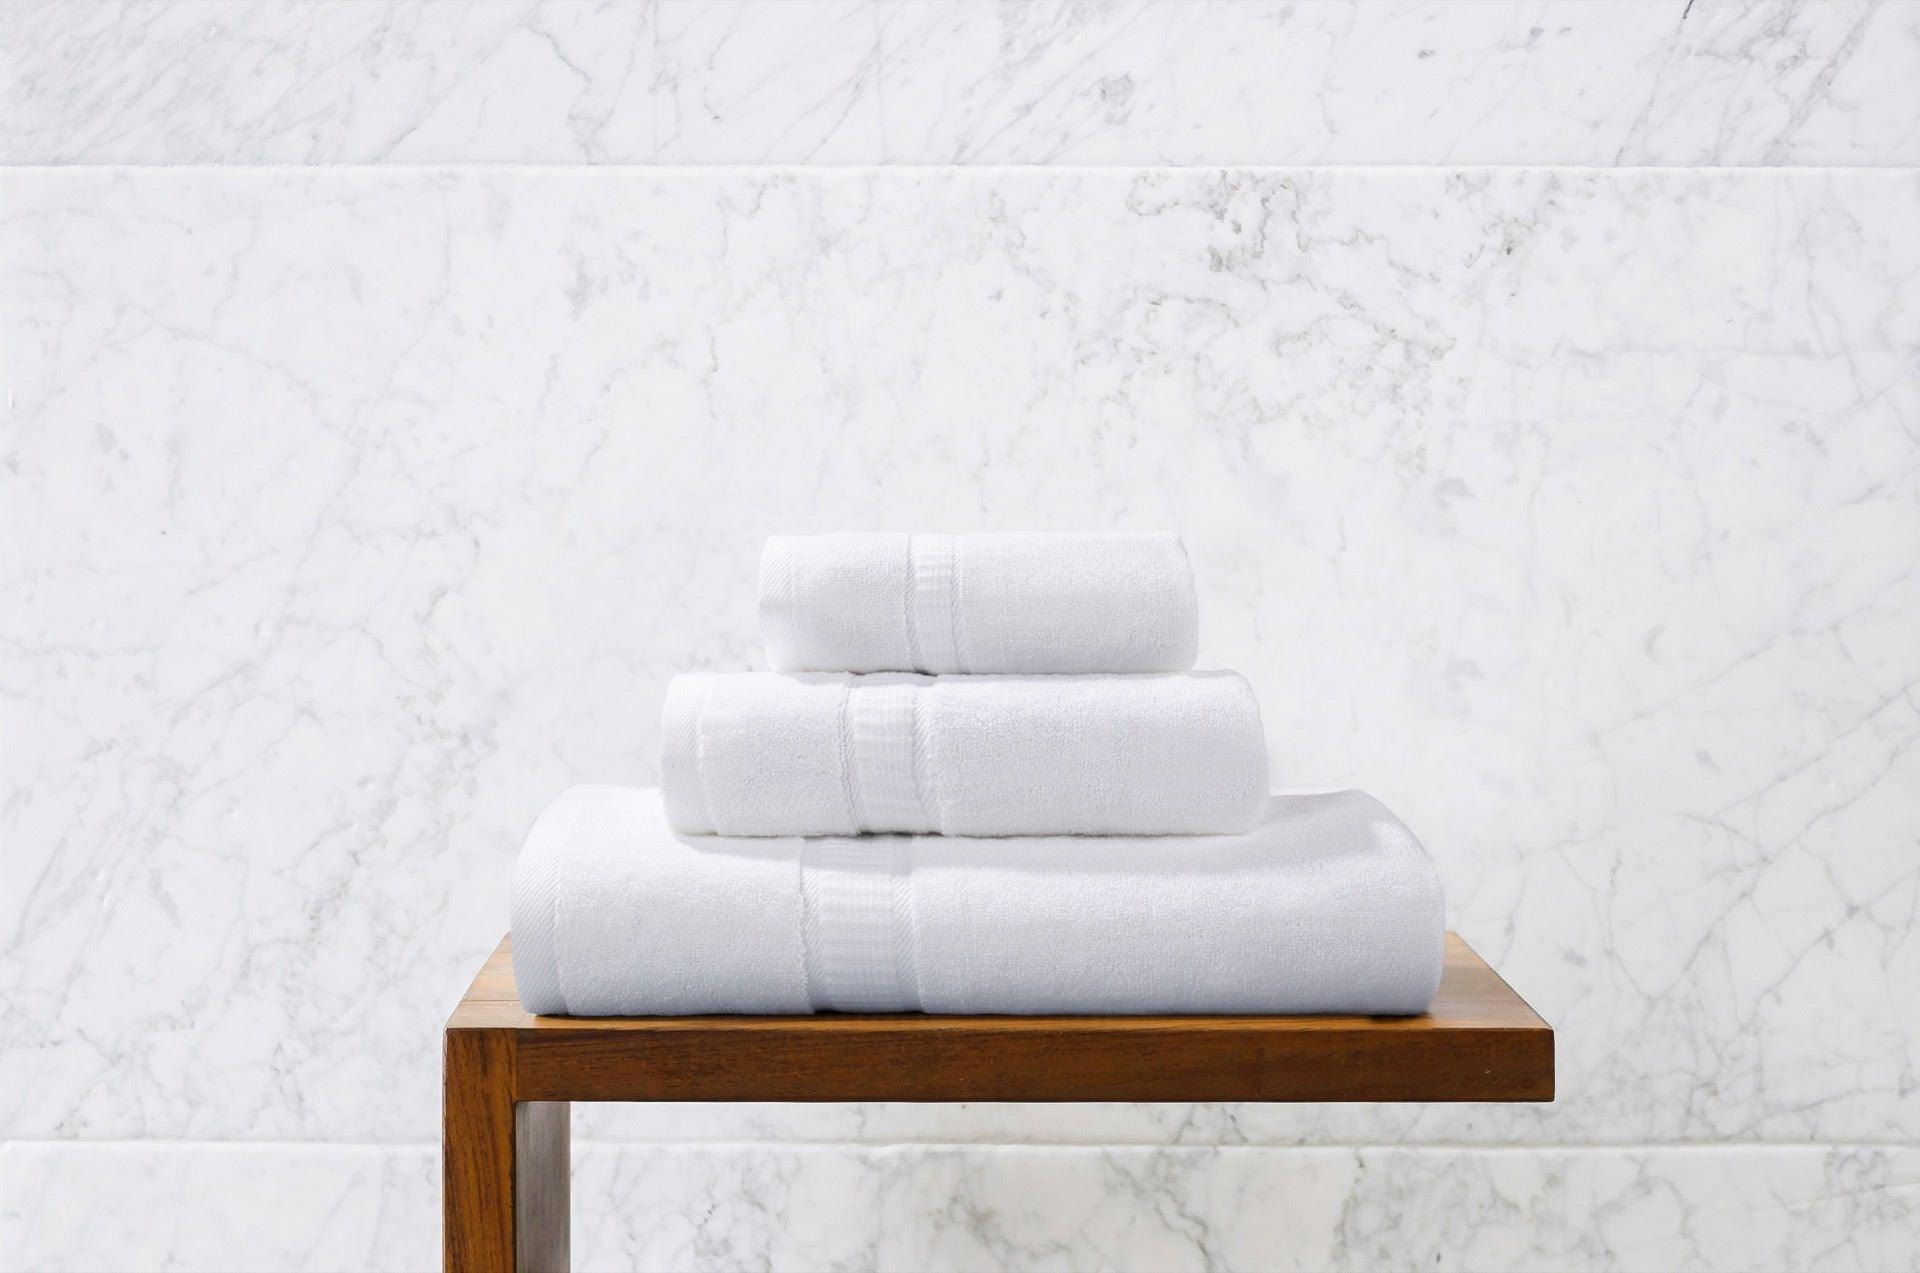 Bamboo Jacquard Towel Set - NOT LABELED